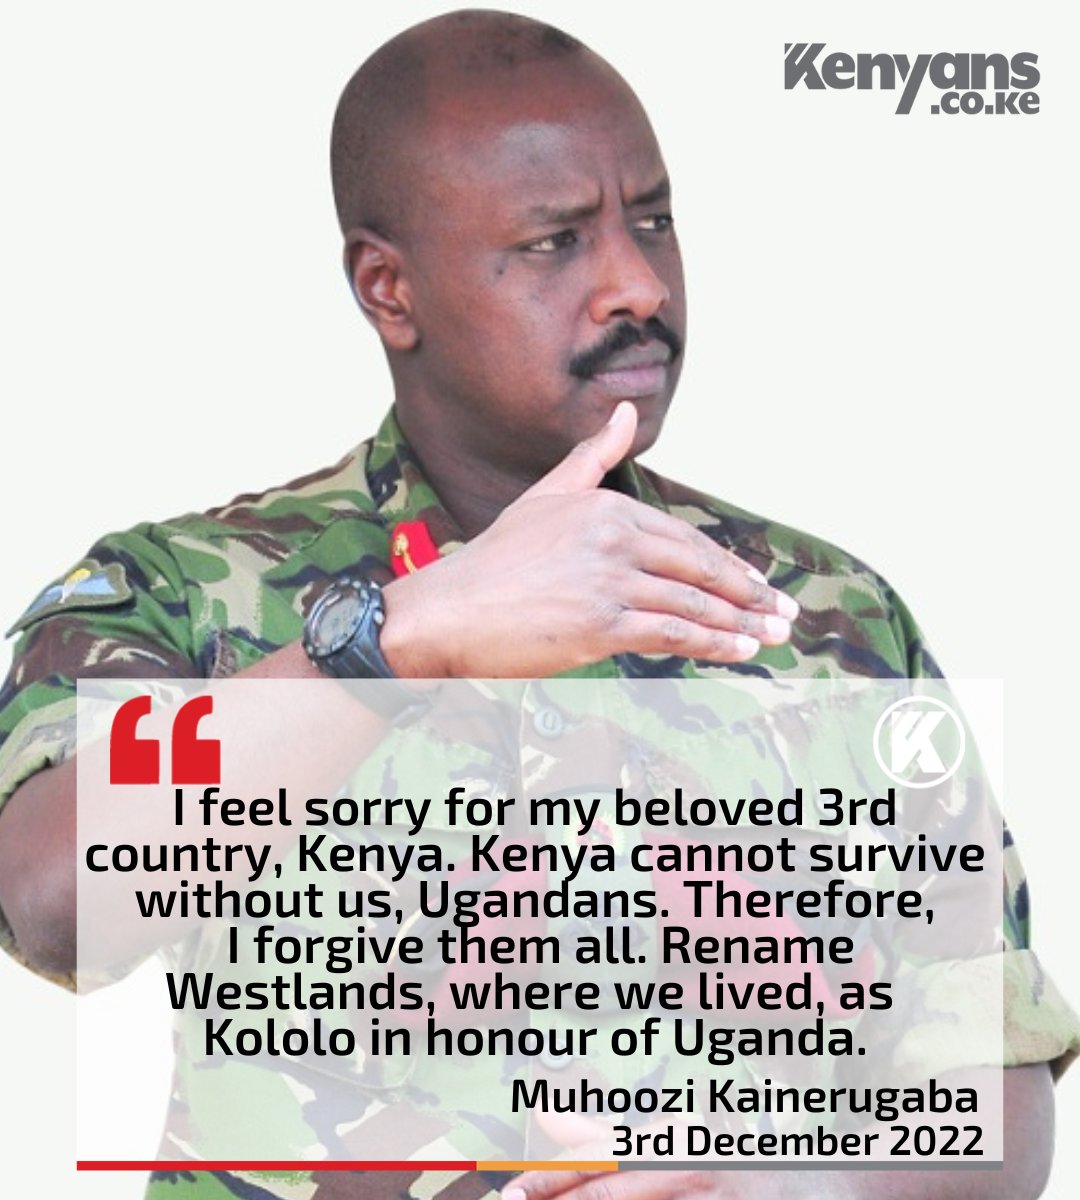 I feel sorry for my beloved 3rd country, Kenya because Kenyans cannot survive without us, Ugandans - Muhoozi Kainerugaba